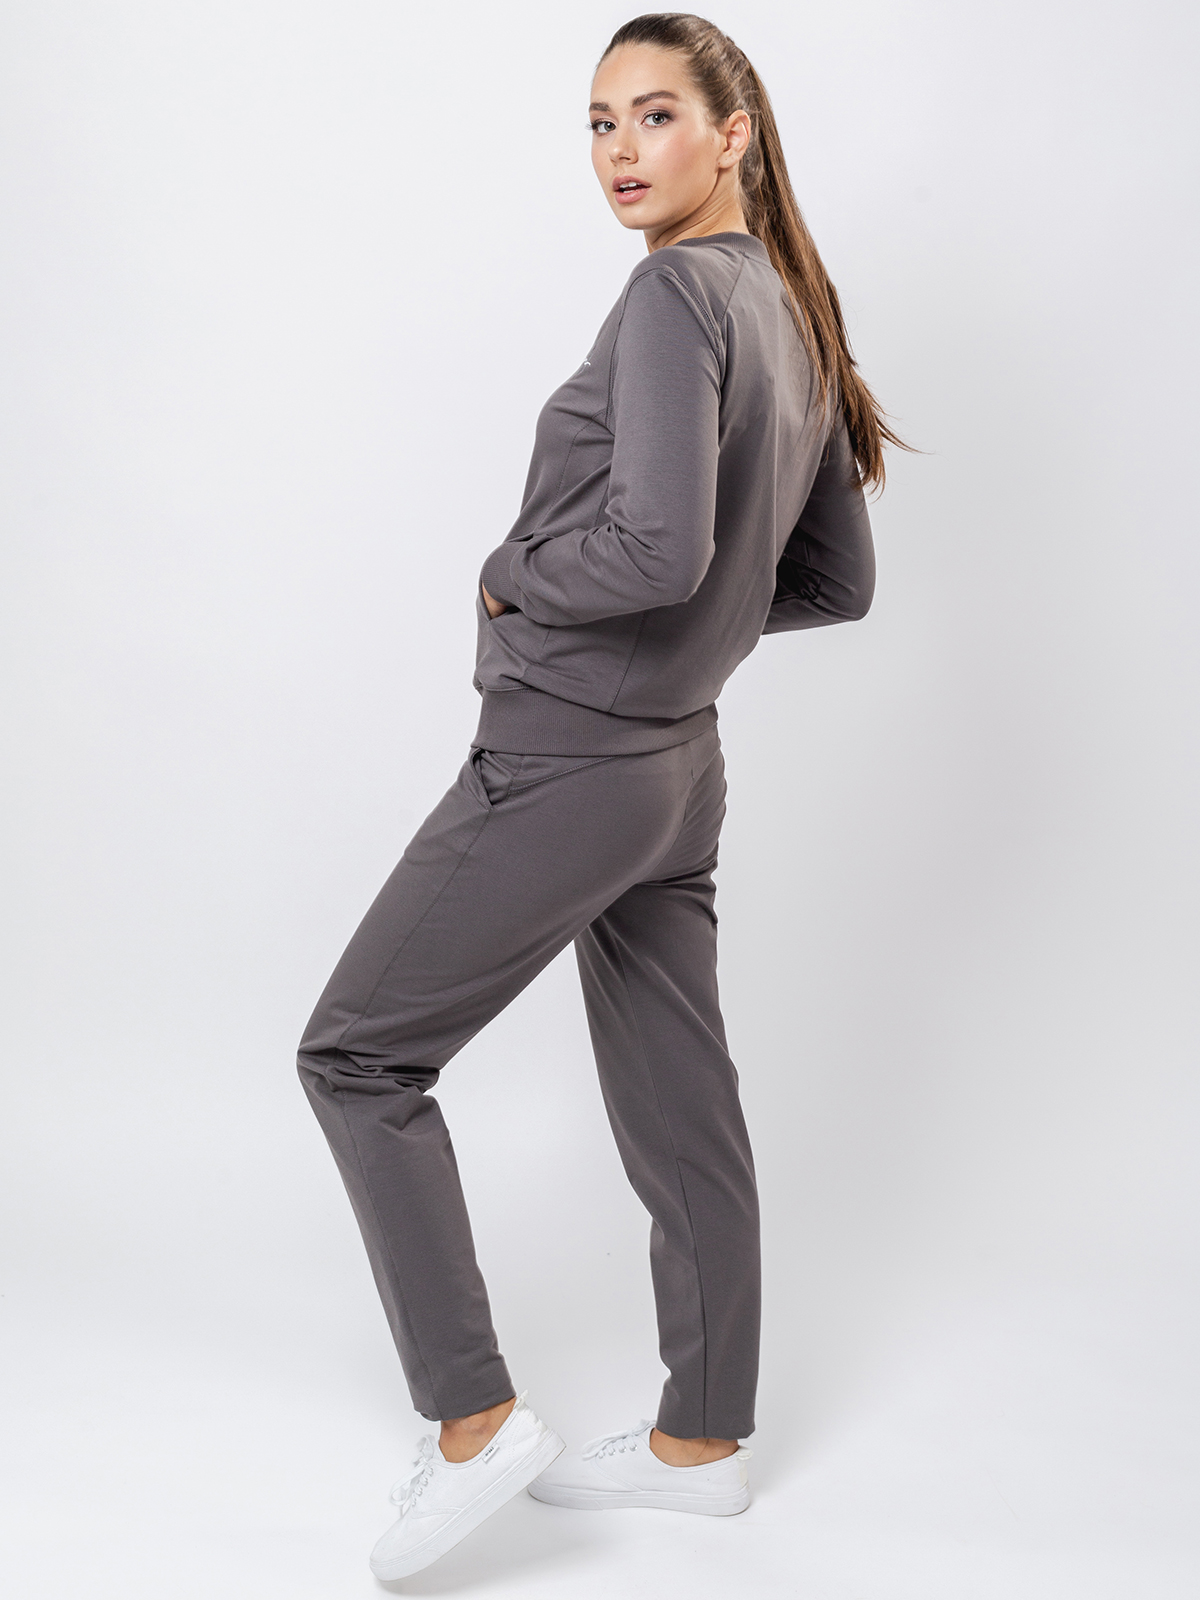 фото Спортивные брюки женские oxouno oxo 0655 footer 02 серые s